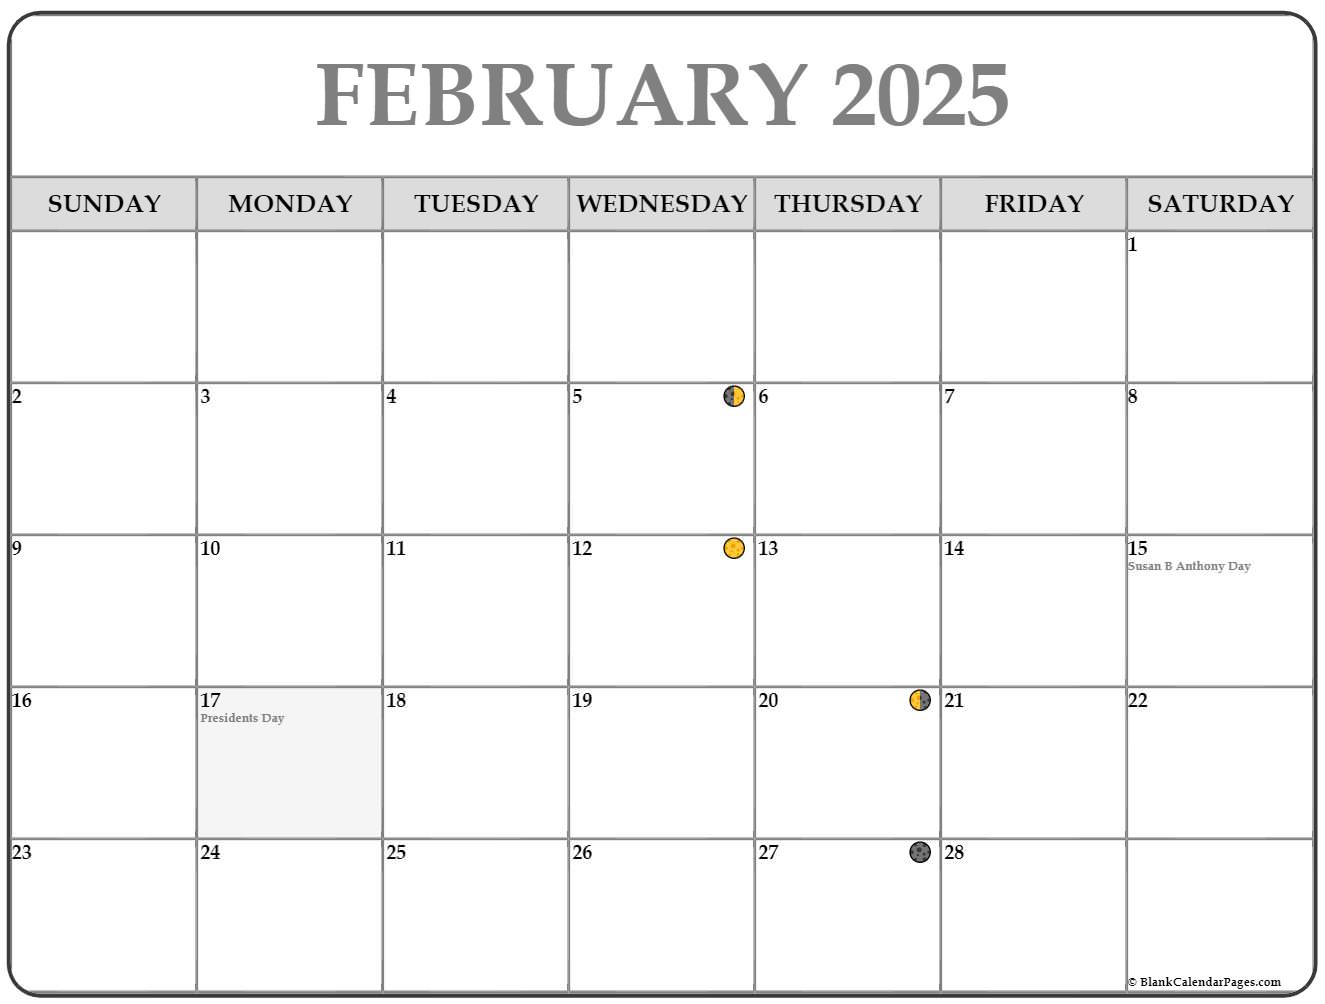 February 2025 Lunar Calendar Moon Phase Calendar